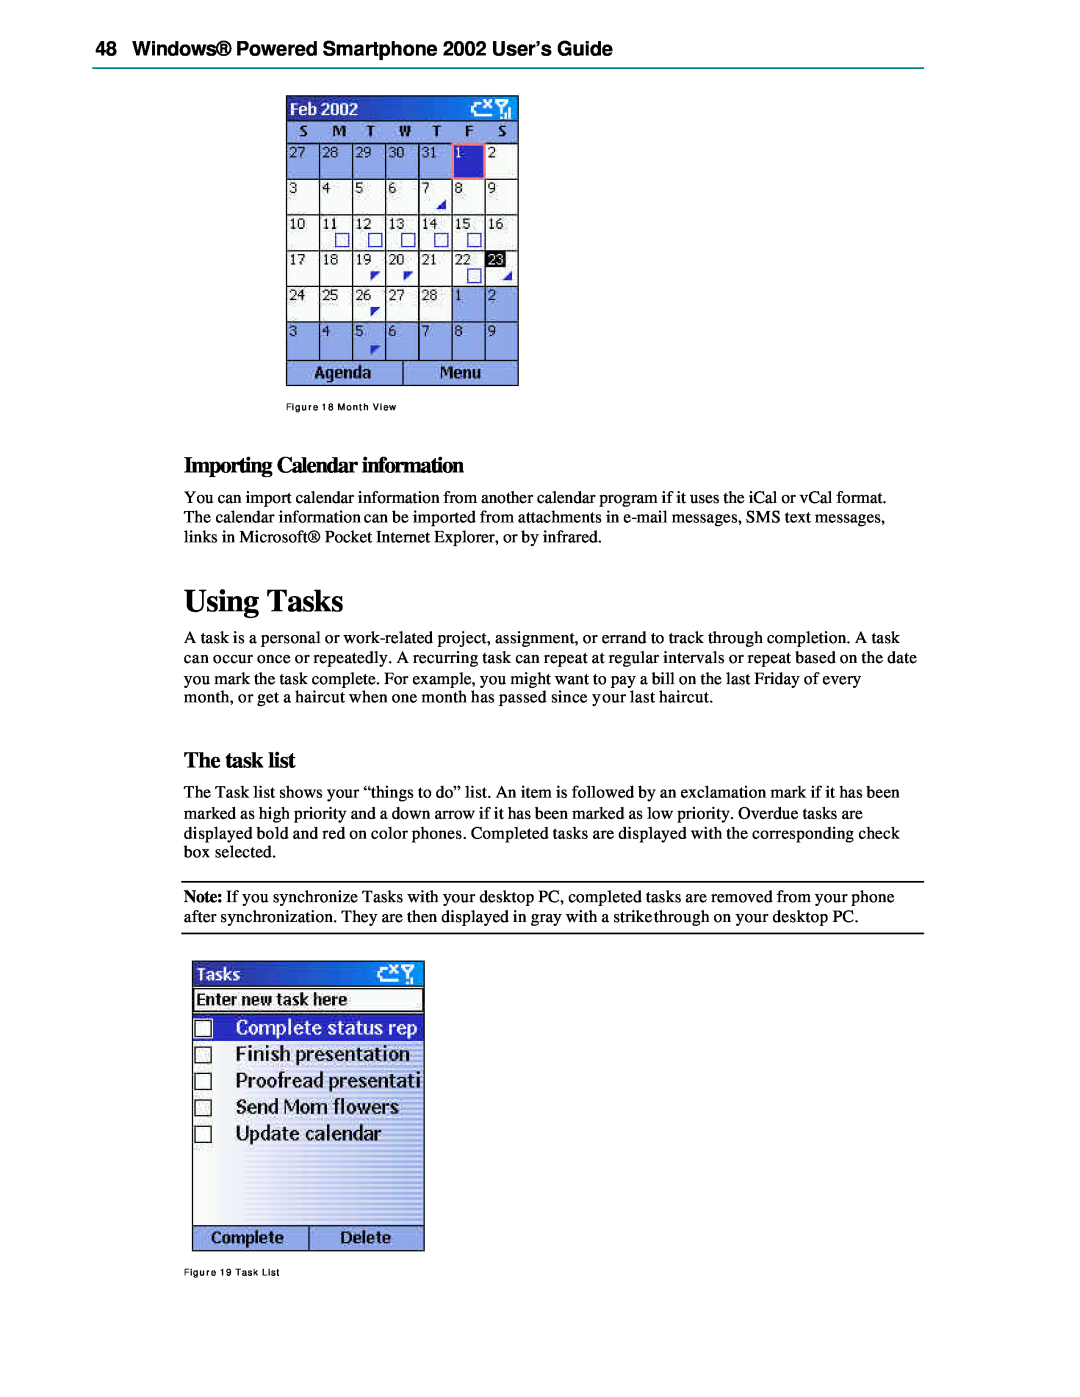 Microsoft Smartphone 2002 manual Using Tasks, Importing Calendar information, The task list 